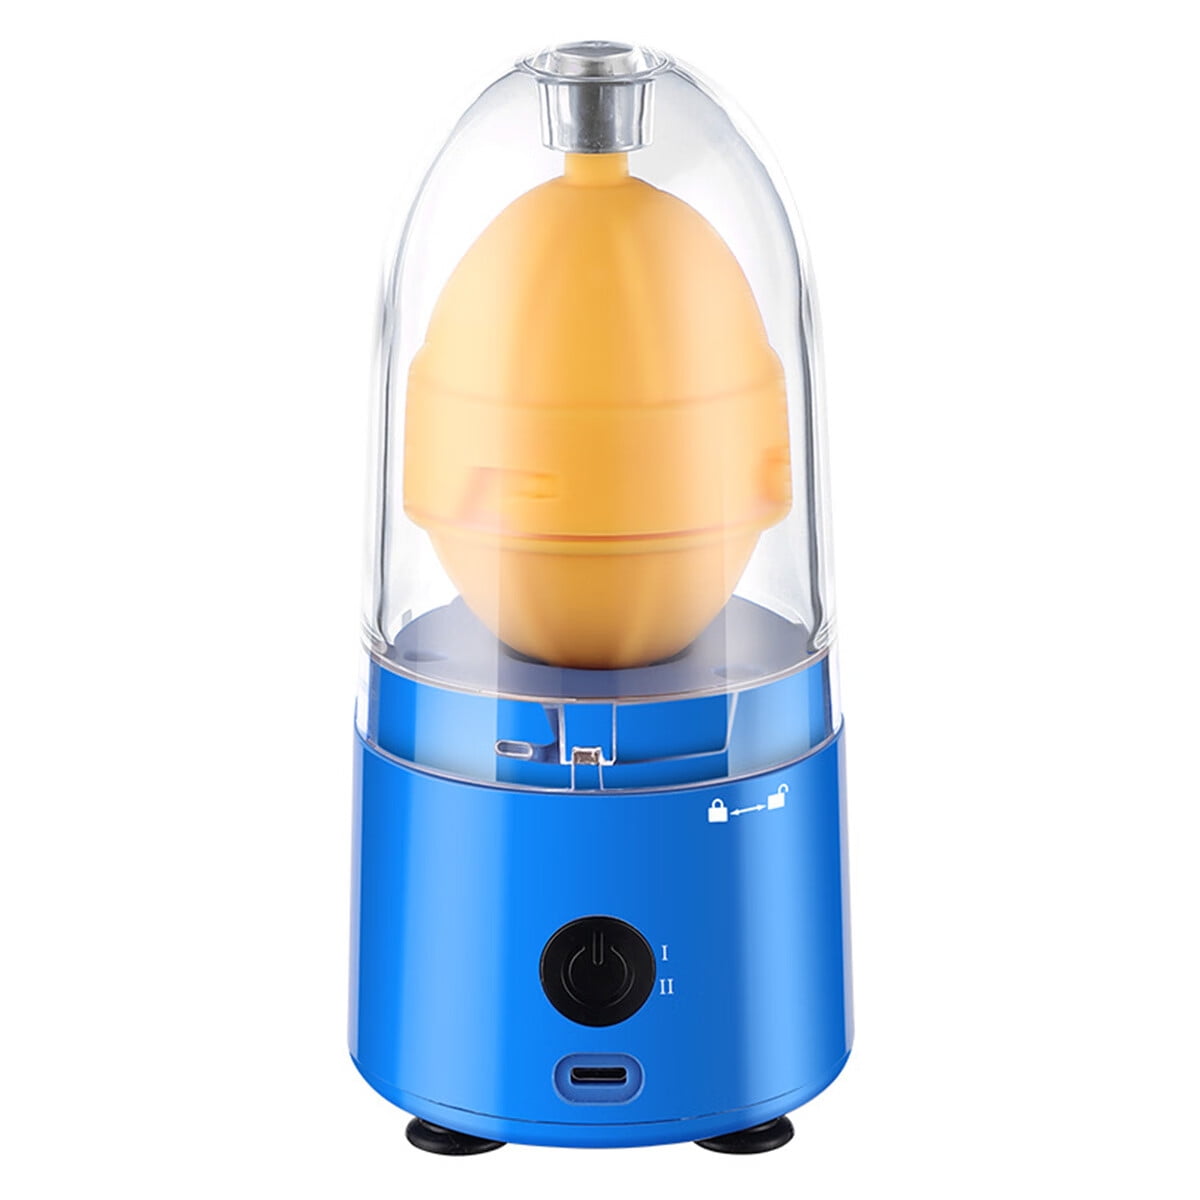  SQRMINI Electric Egg Spinner, Eggs Yolk White Mixer